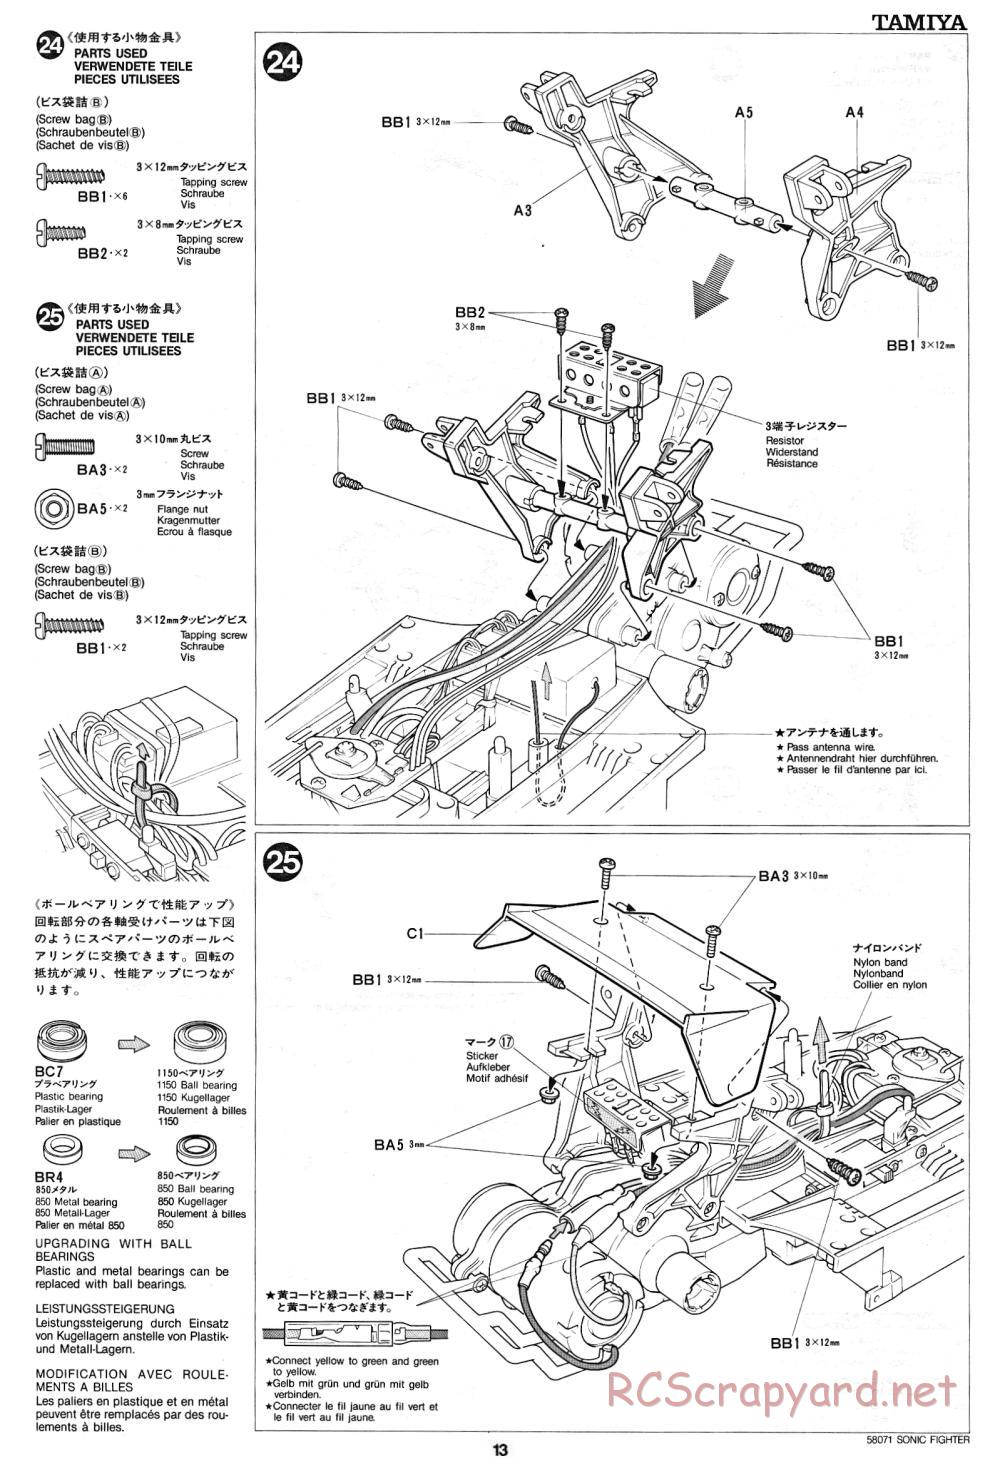 Tamiya - Sonic Fighter - 58071 - Manual - Page 13